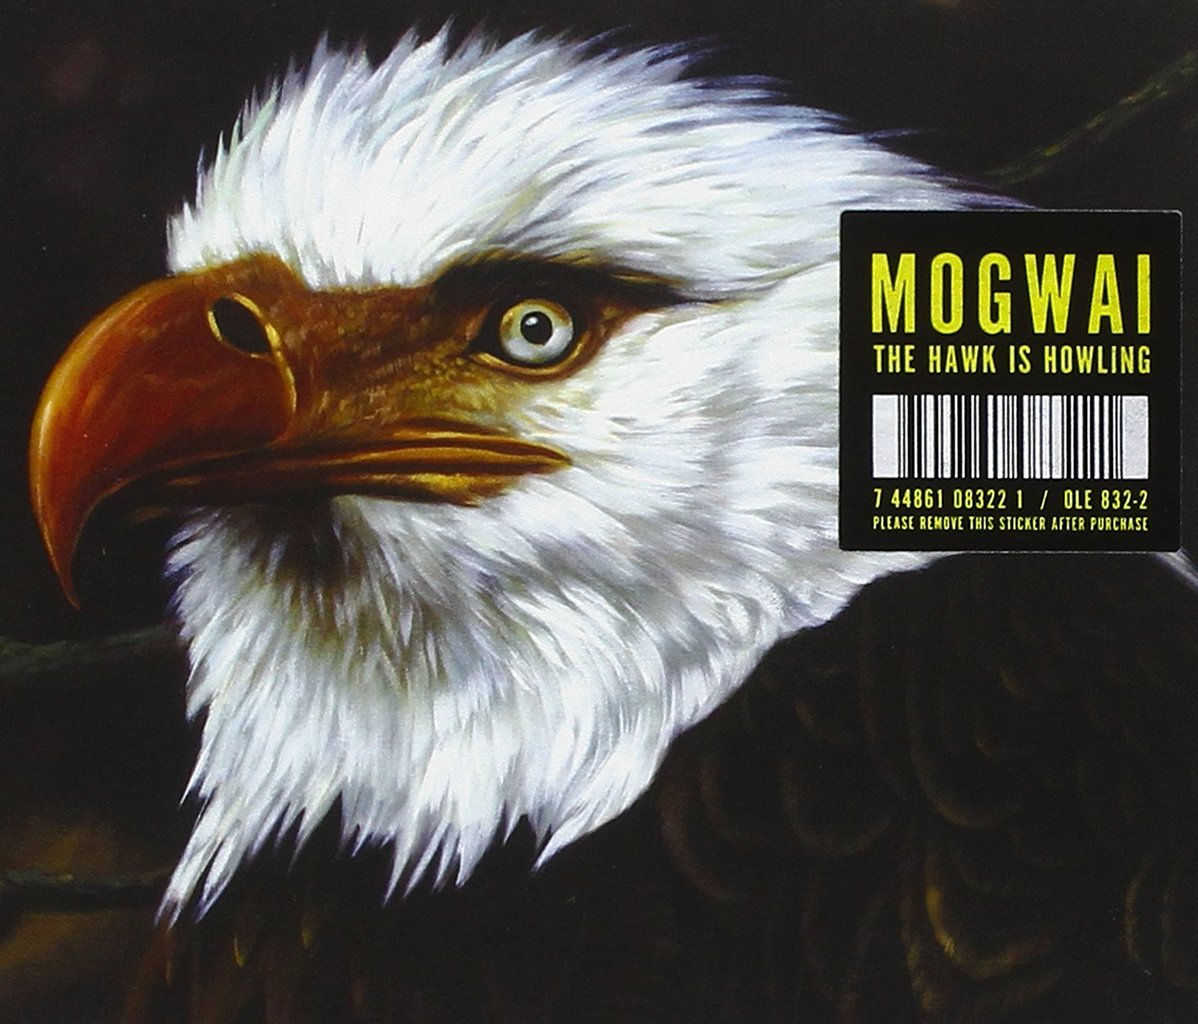 Mogwai "Hawk is Howling" 2LP